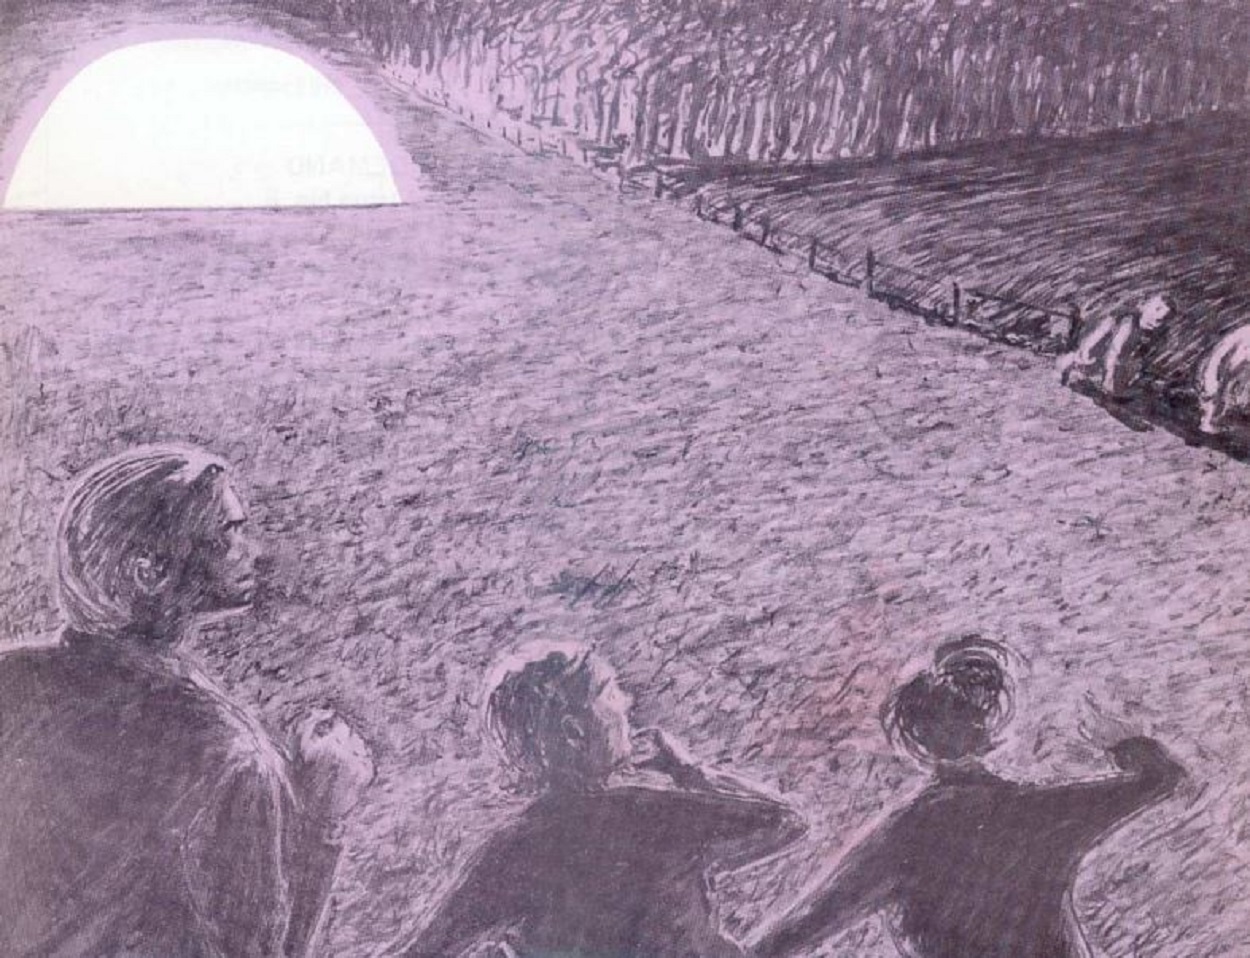 Artist's depiction of the Pulaski encounter 